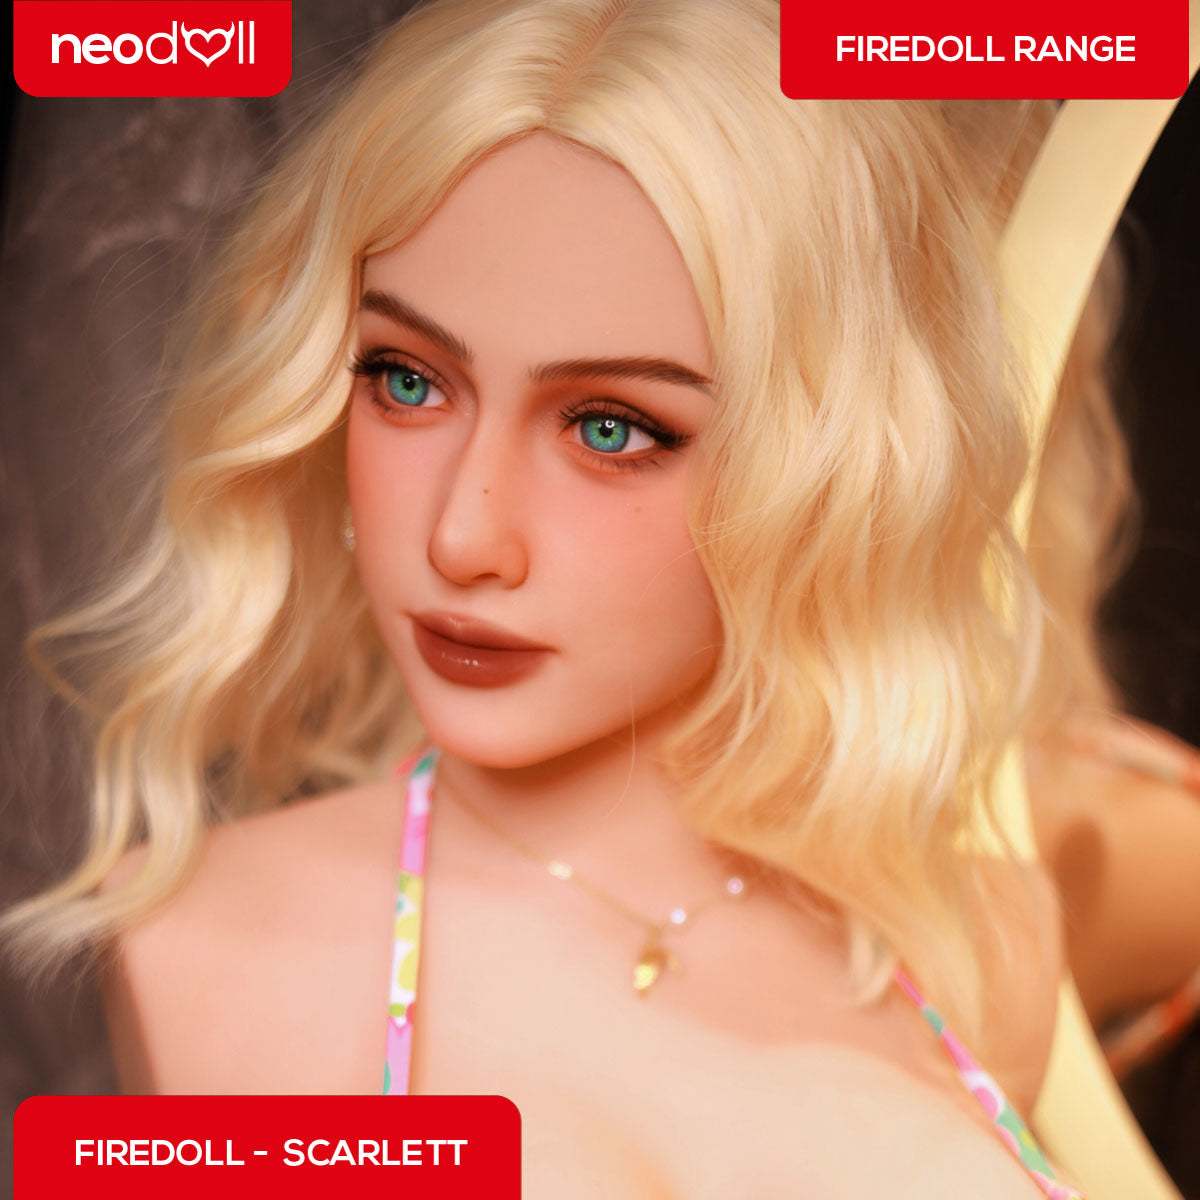 Firedoll Torso - Scarlett - Realistic Sex Doll Torso - Light tan